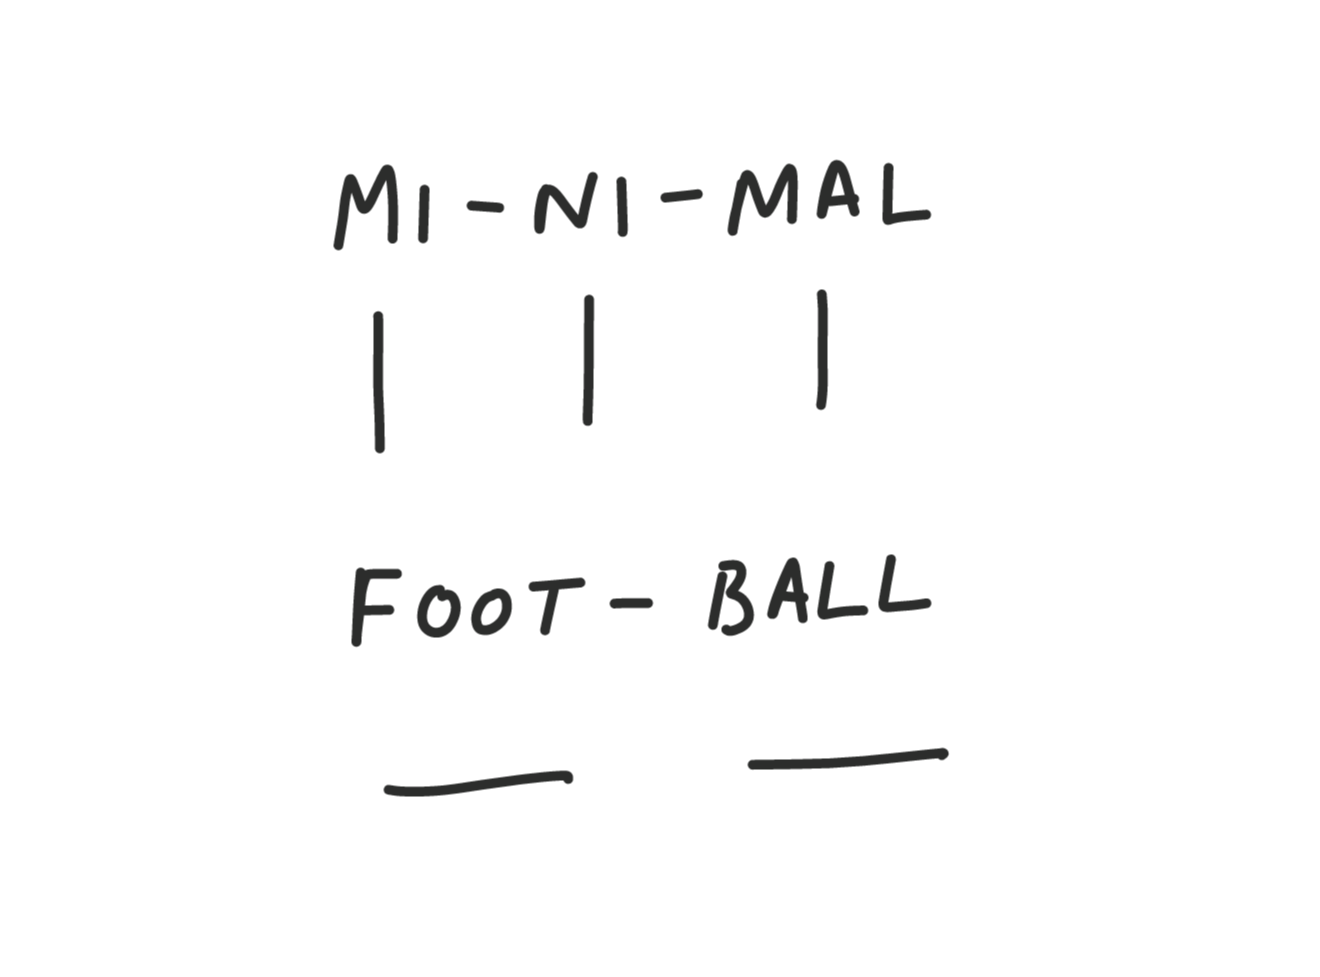 Minimal football brand drafts